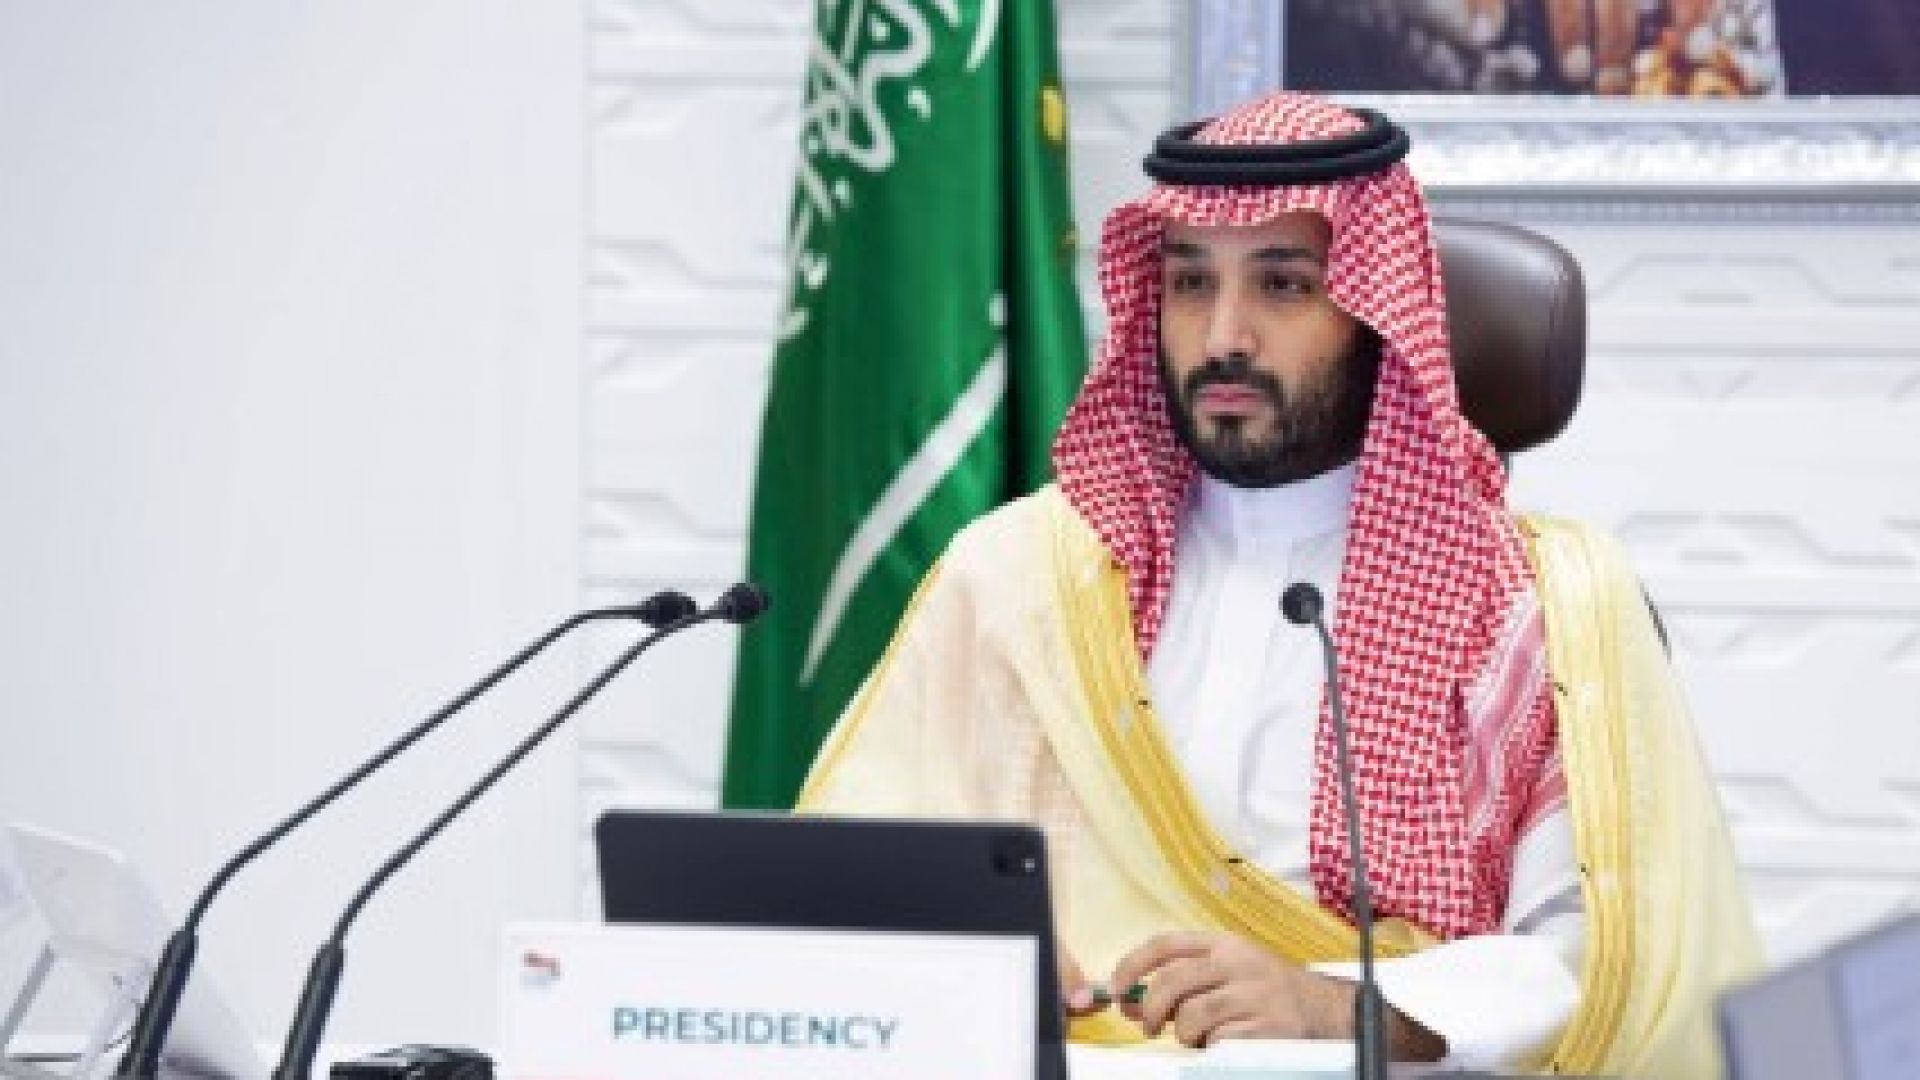 Как в Европа отново заобичаха саудитския принц